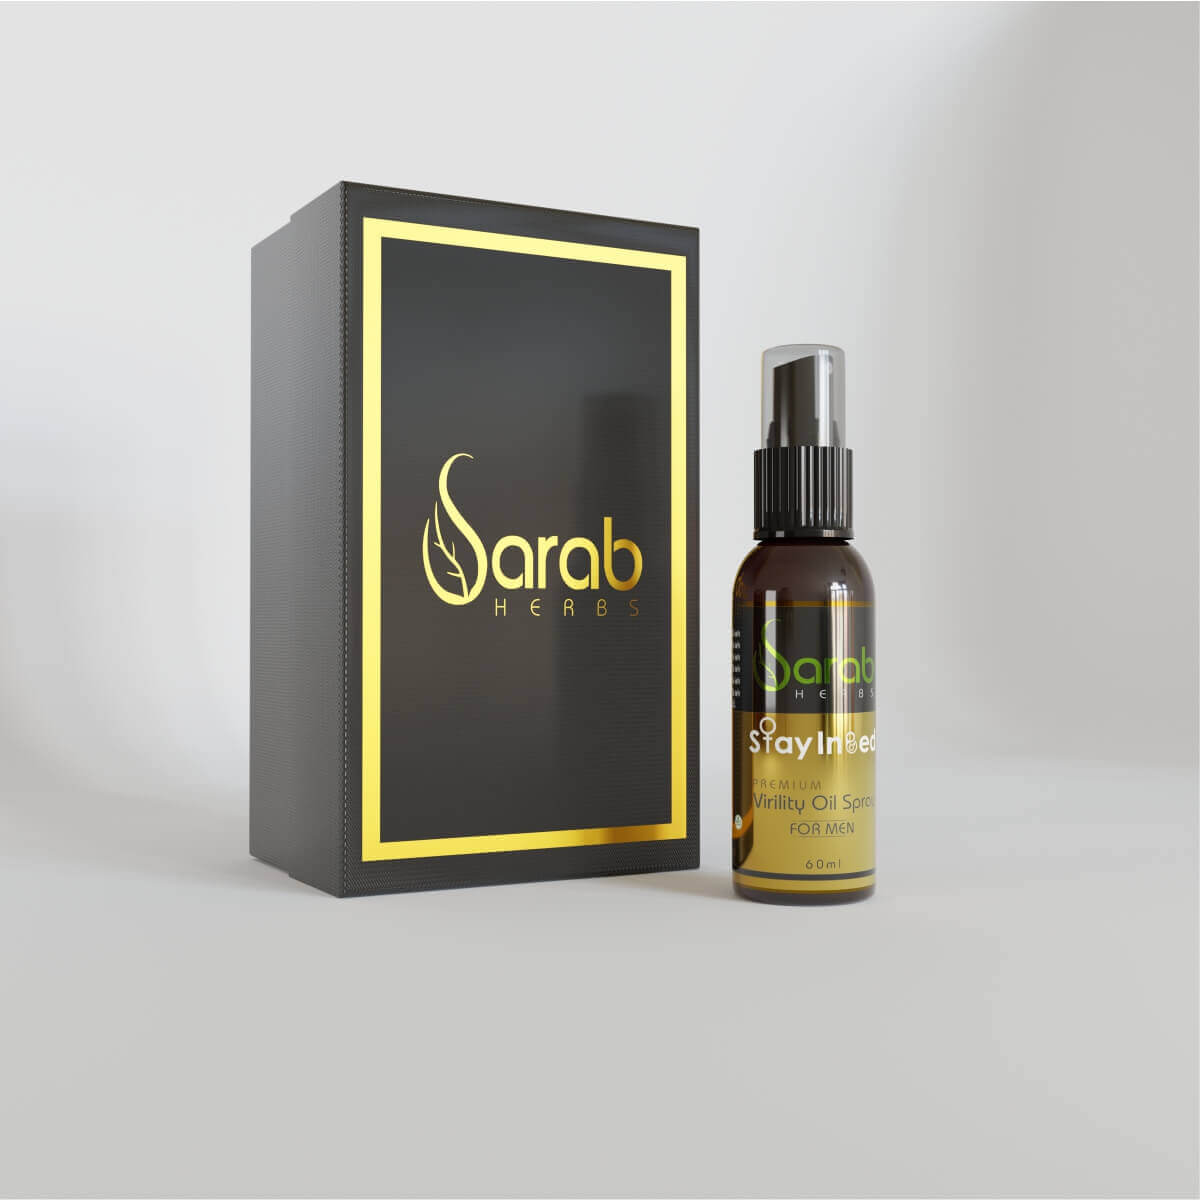 Stay in Bed Virility Oil Spray - Sarab Herbs